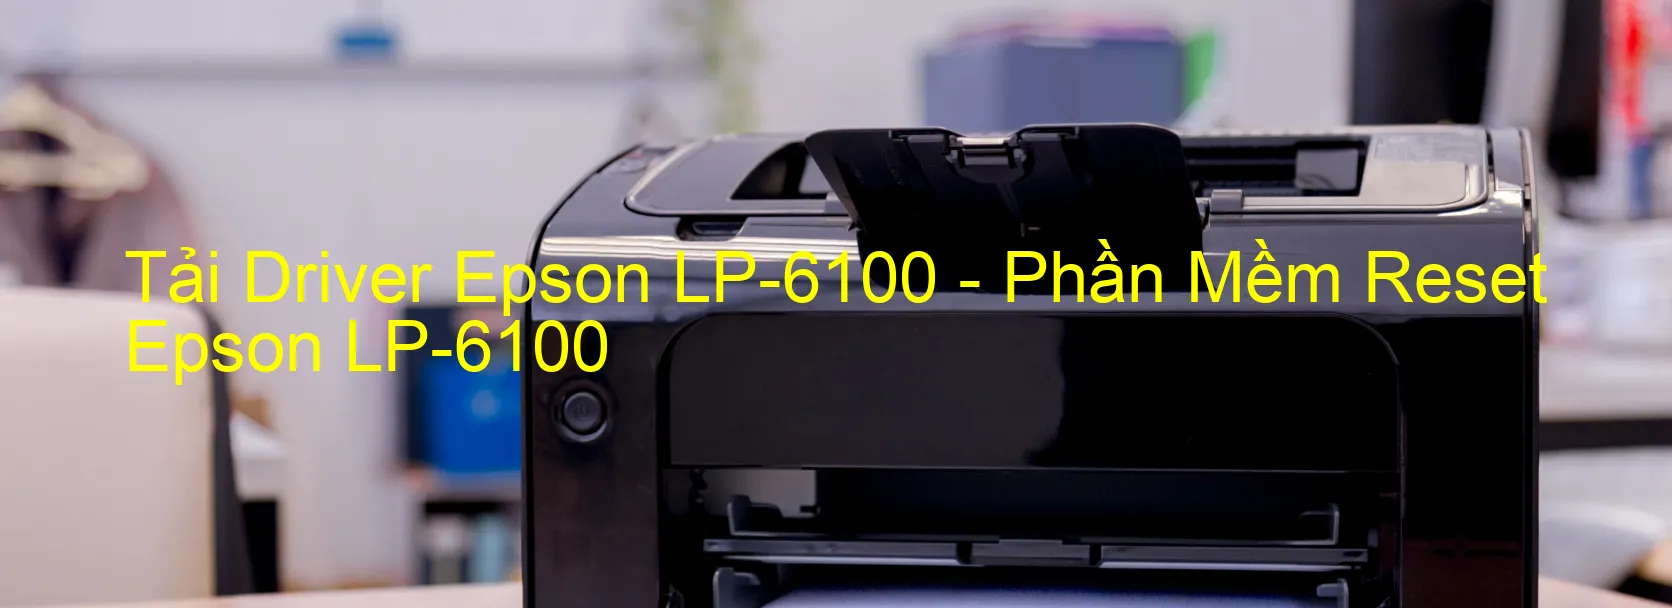 Driver Epson LP-6100, Phần Mềm Reset Epson LP-6100